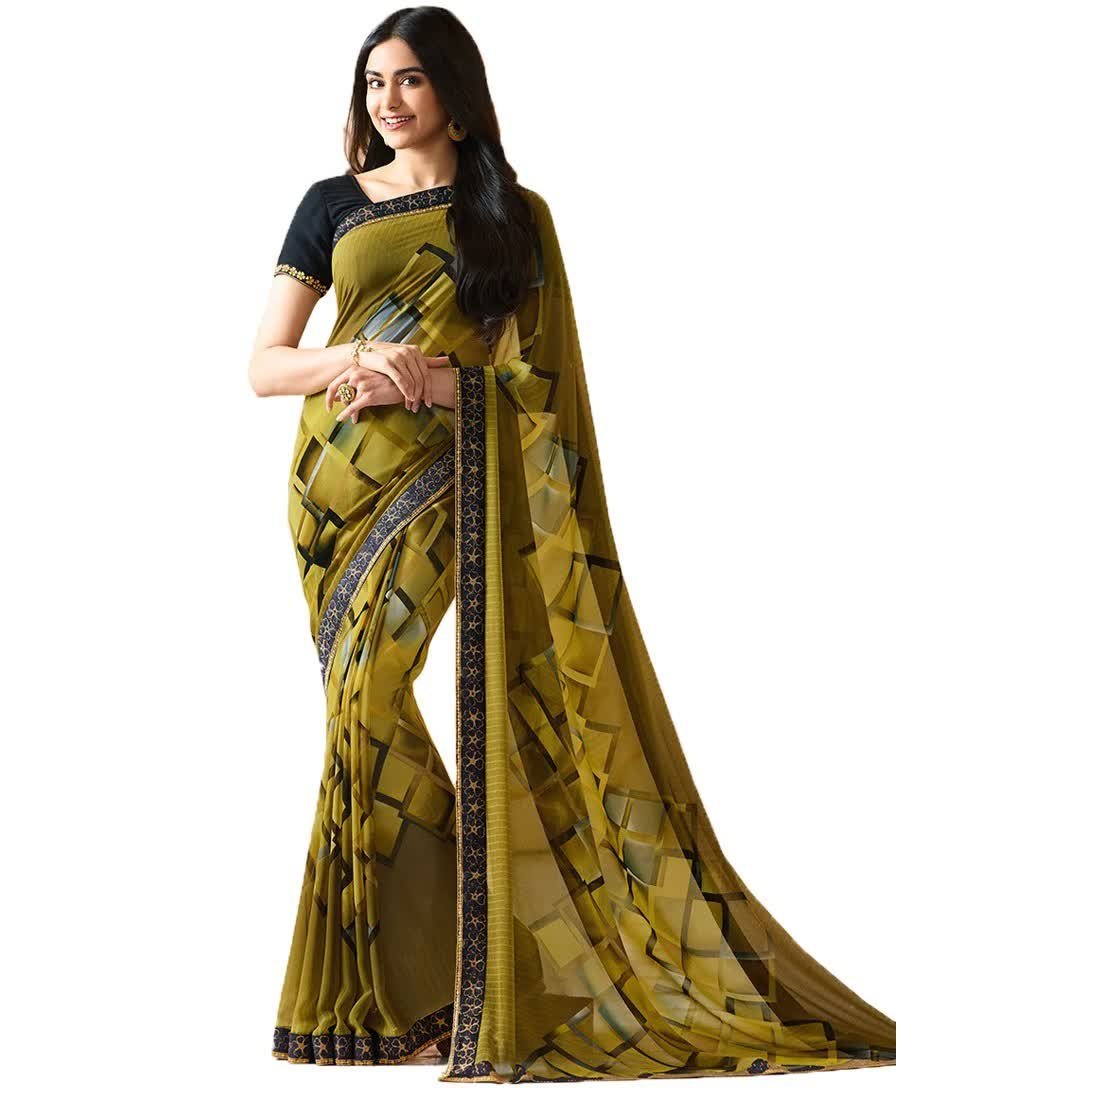 Борган сари. Индийское Сари. Сари индийская одежда Повседневная. Сари одежда женщин в Индии. Сари Балдауф.